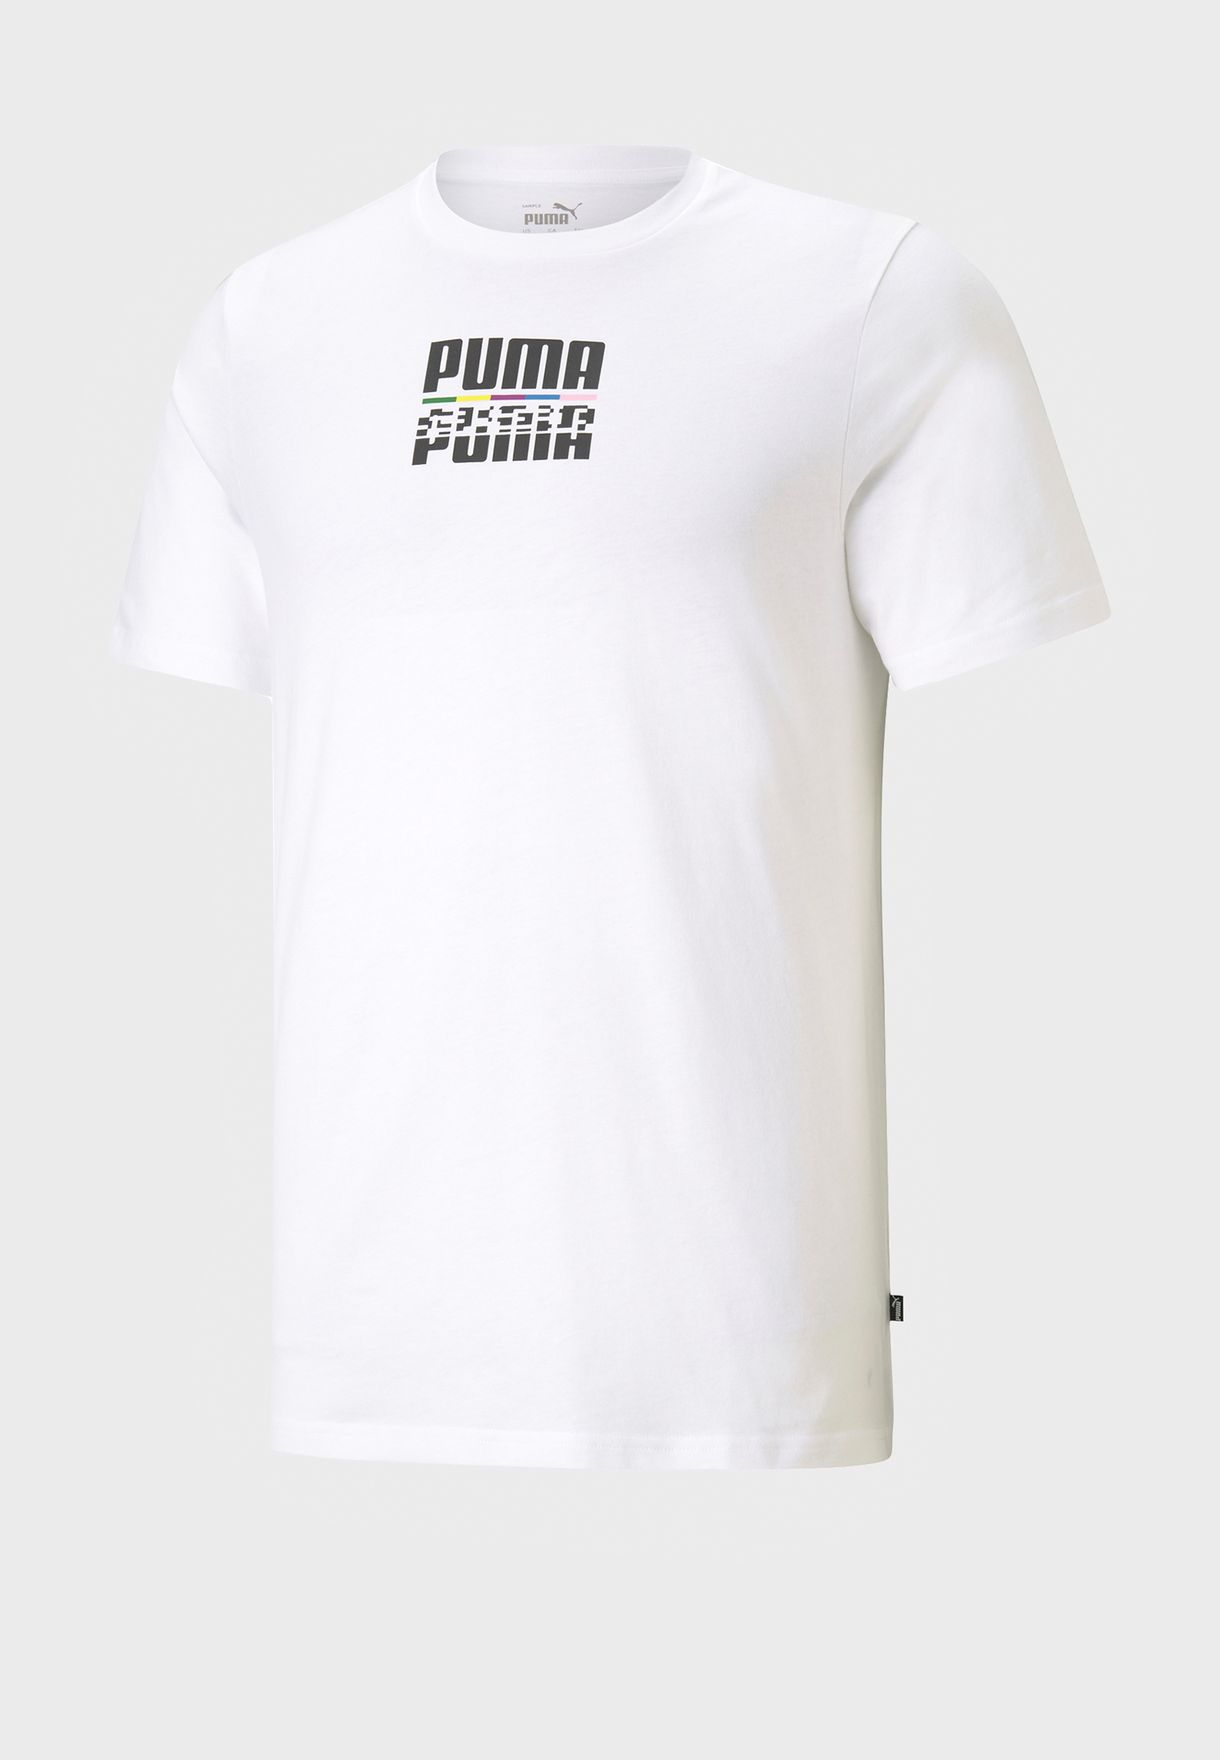 Buy > puma international shirt > in stock